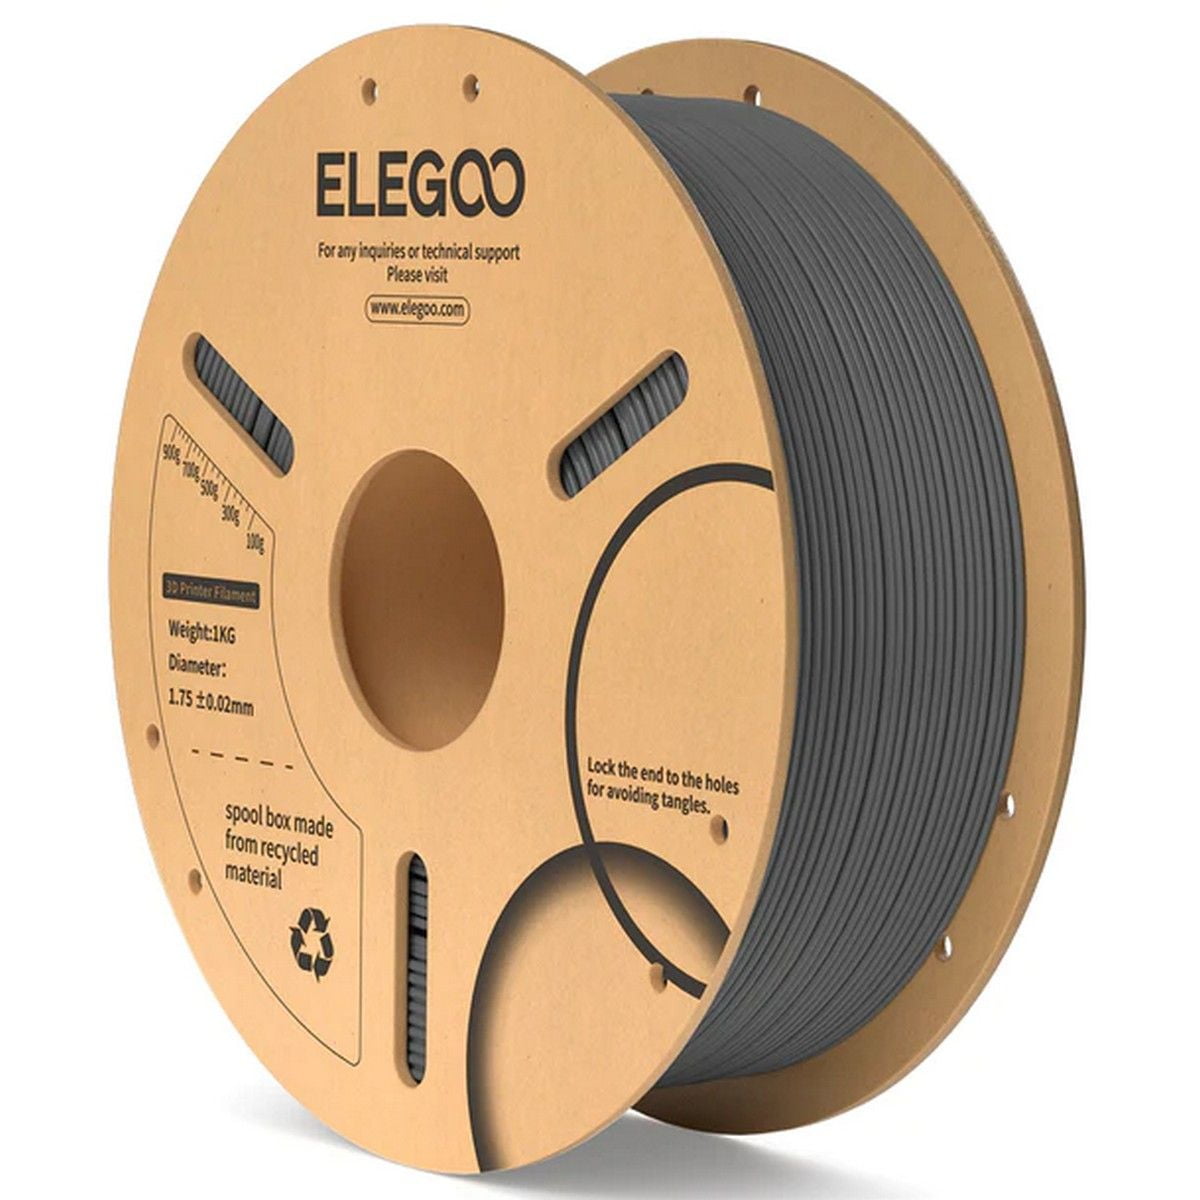 ELEGOO PLA+ Filament 1.75mm 1kg Spool - Space Gray